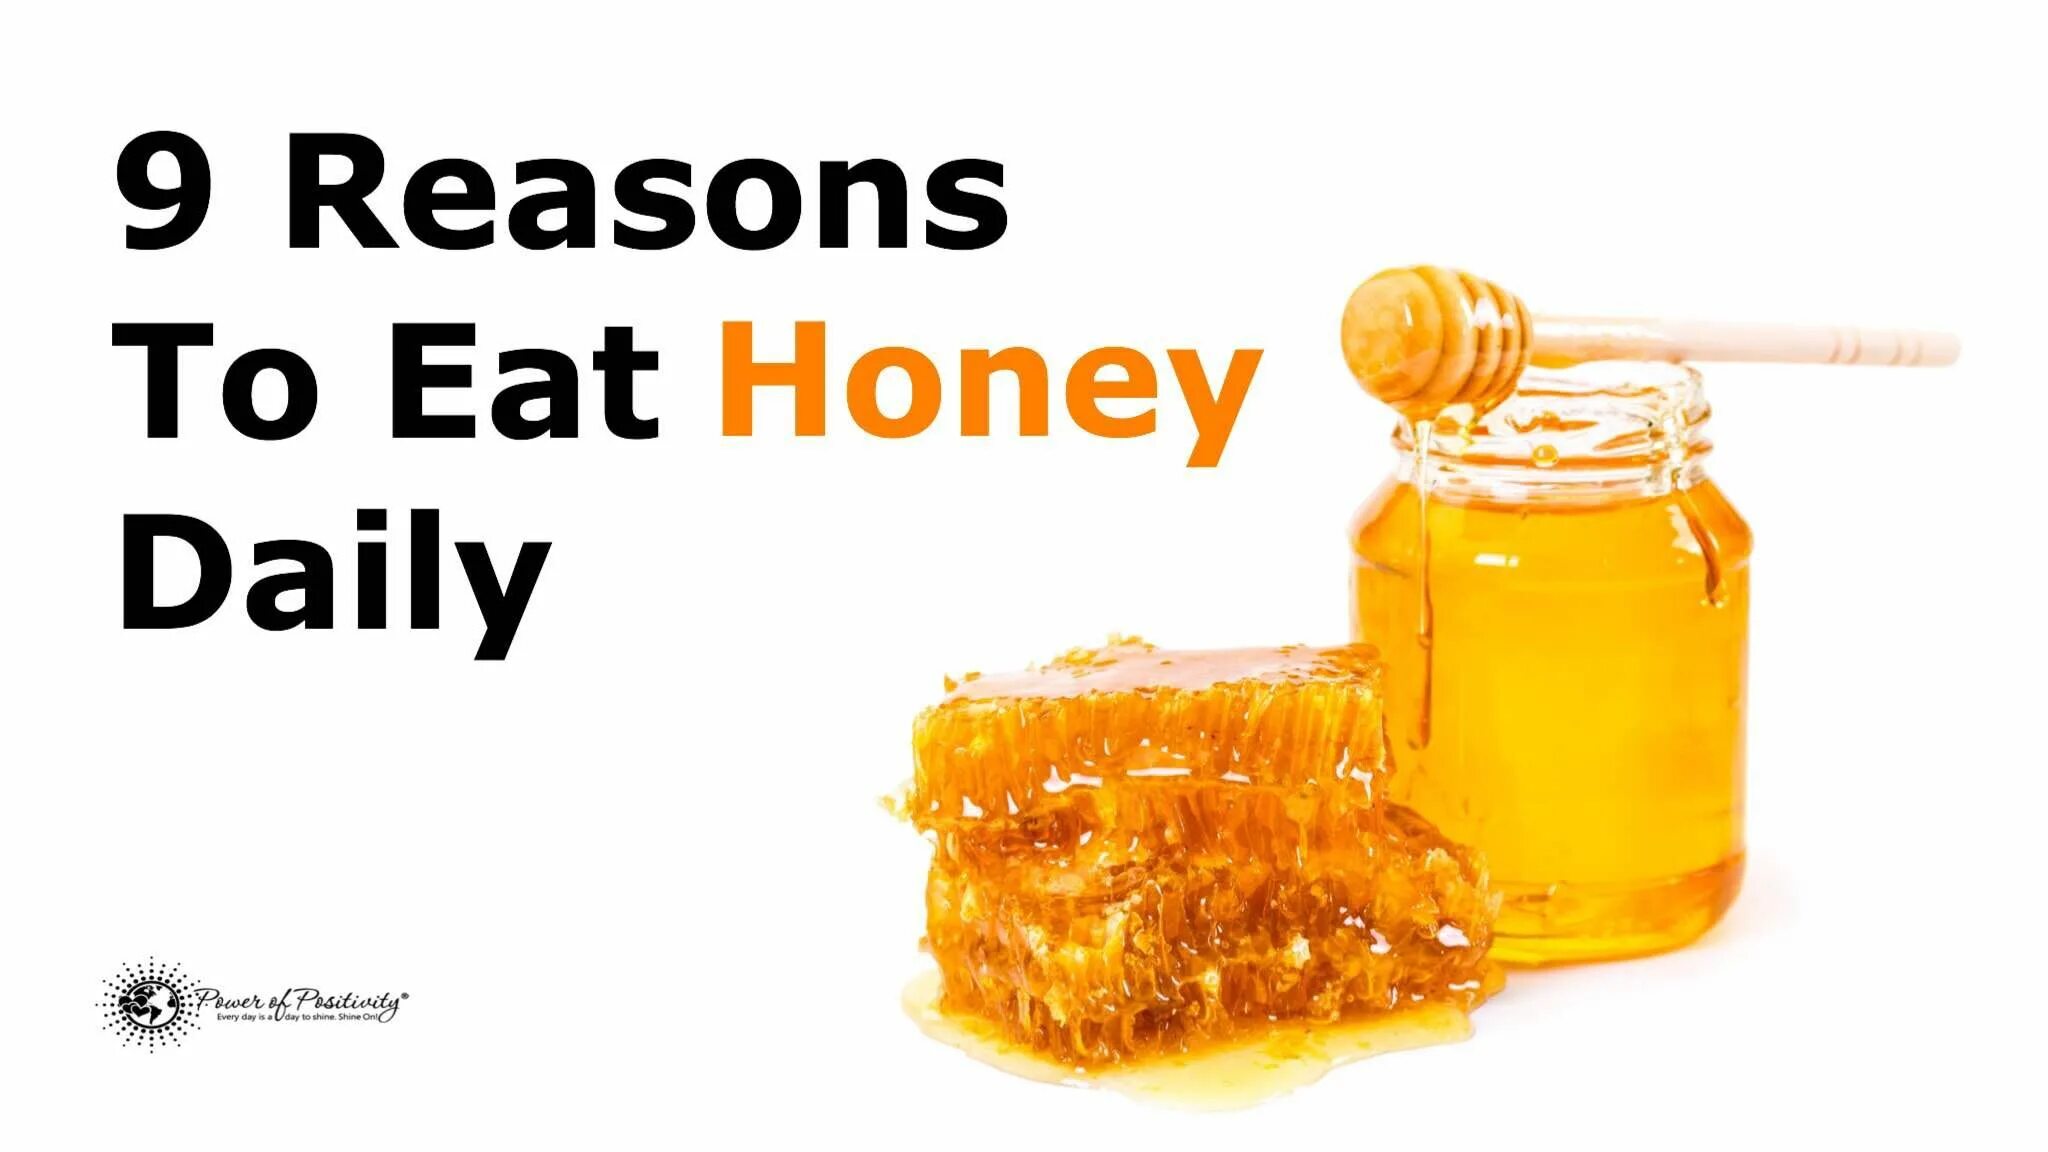 Honey benefits. Too much Honey. Daily reasons. Смайлики из пинтереста Honey. Much honey